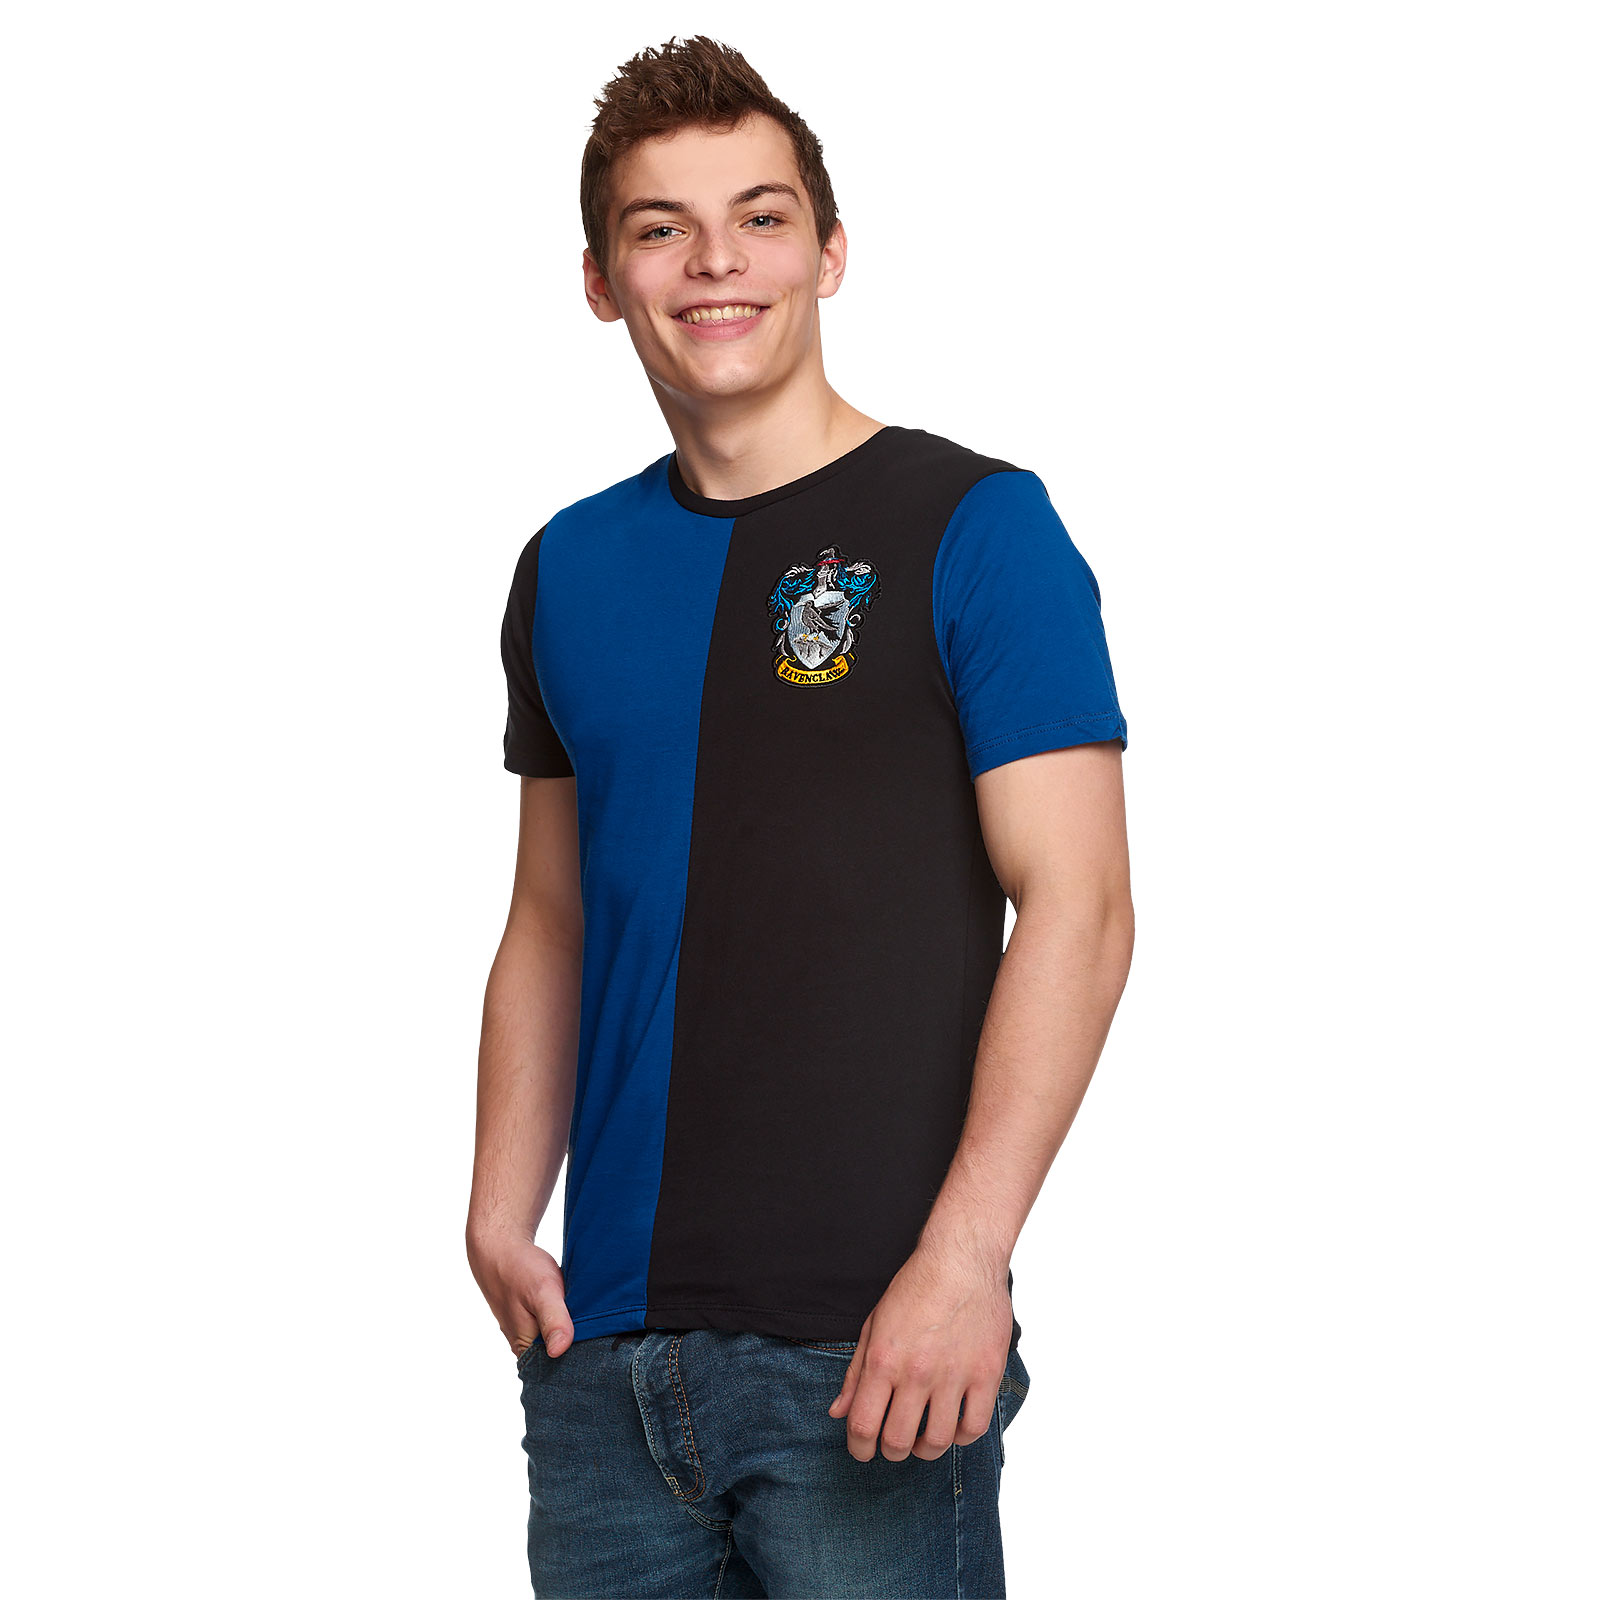 Harry Potter - Ravenclaw Tournament T-Shirt blau-schwarz